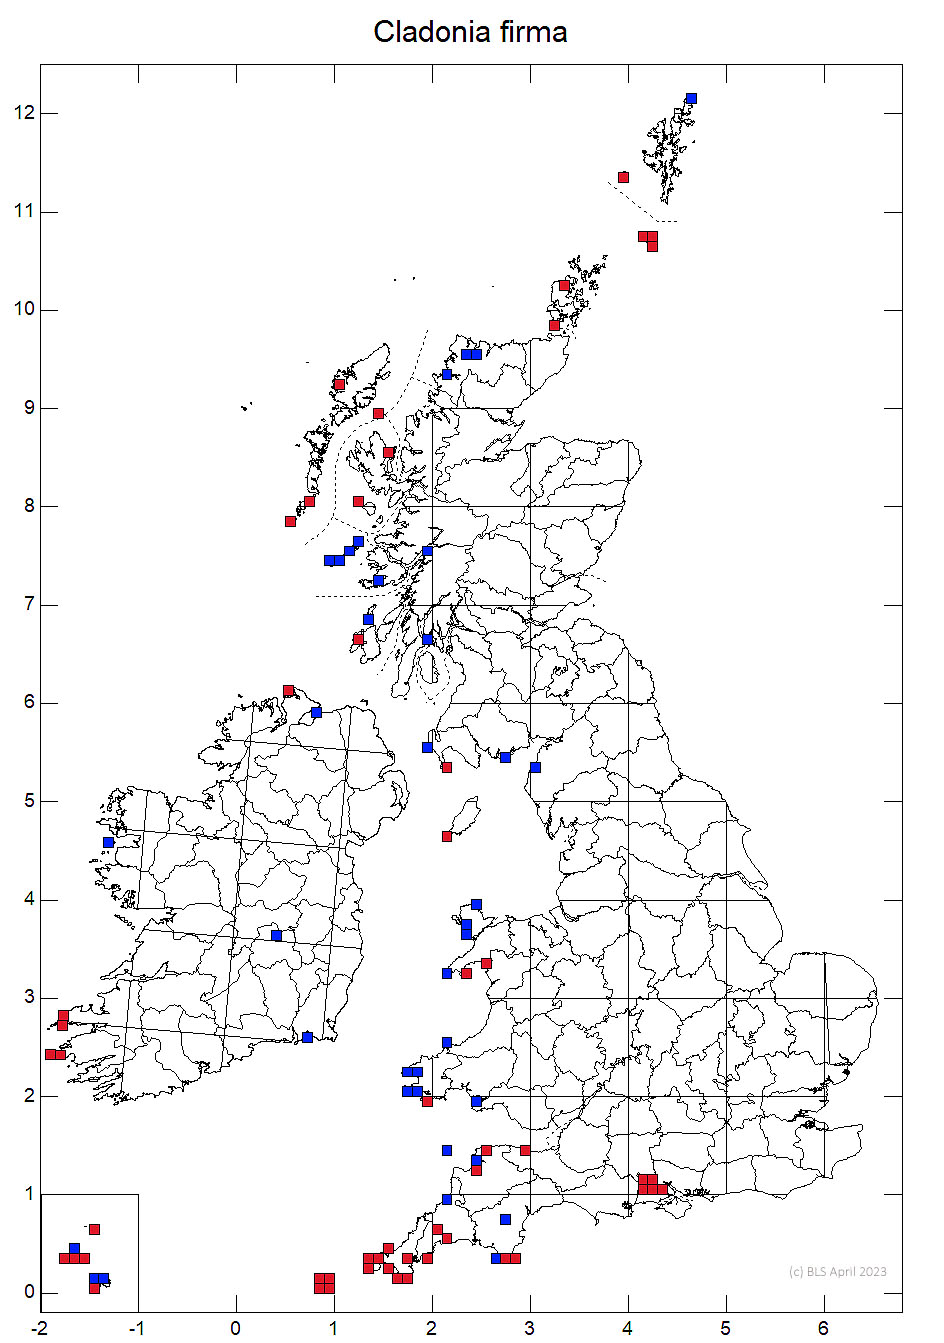 Cladonia firma 10km sq distribution map